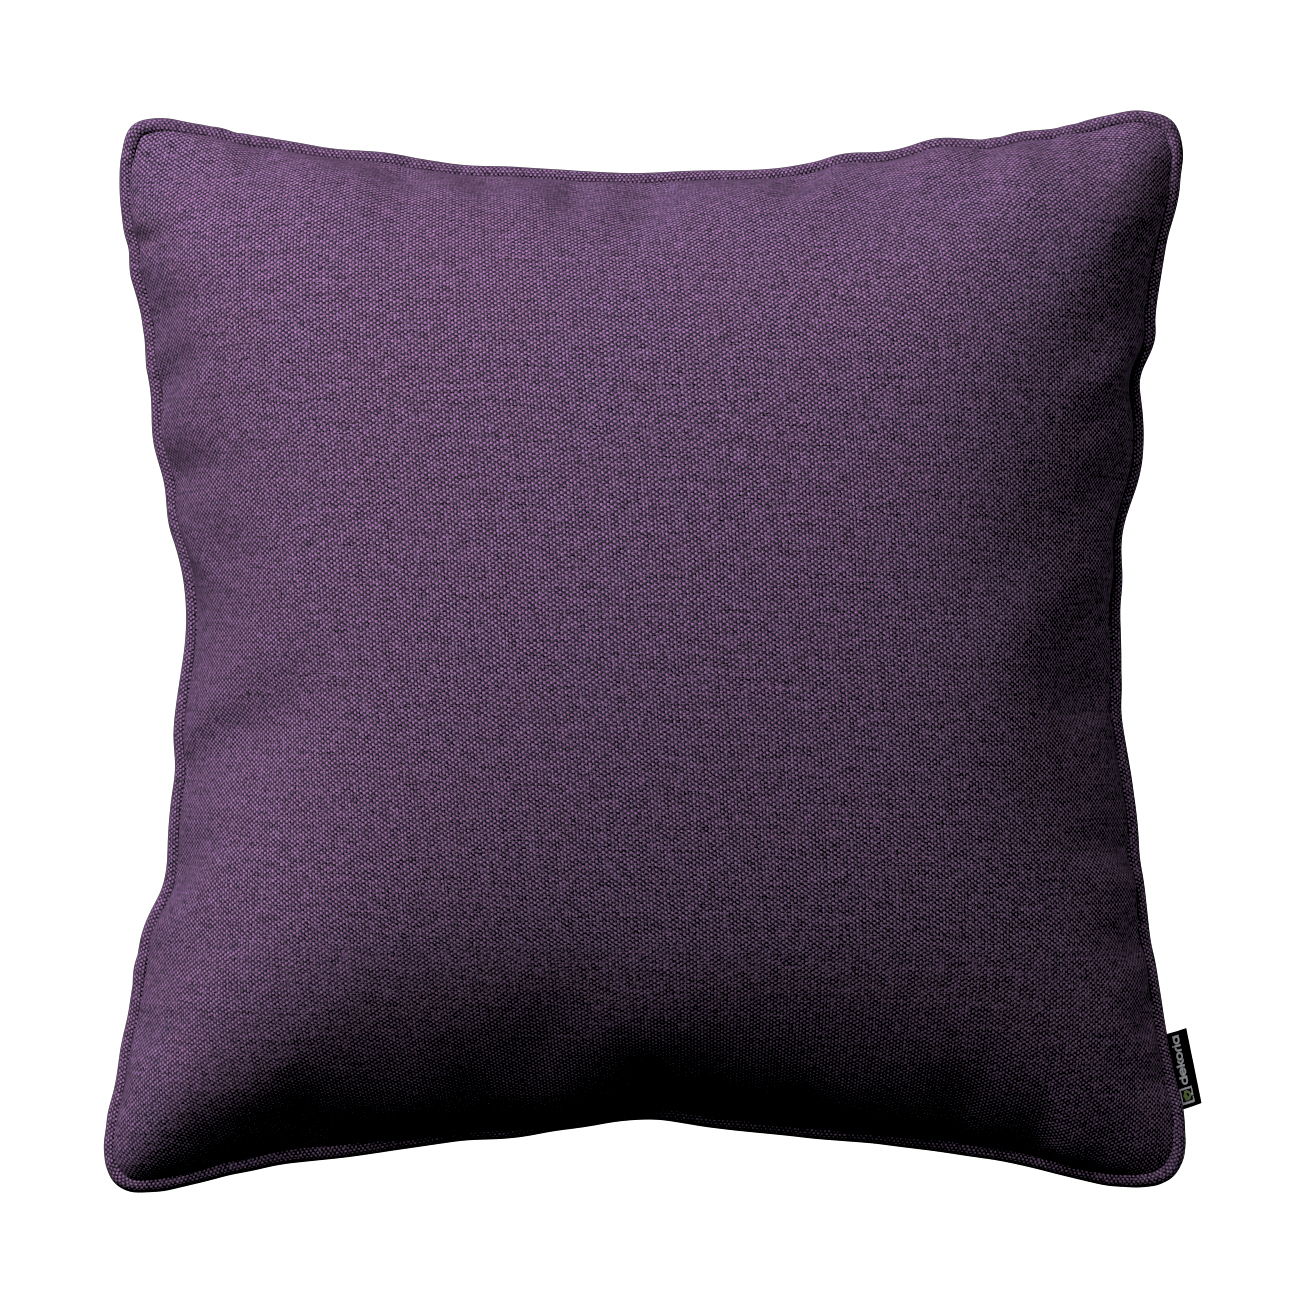 Kissenhülle Gabi mit Paspel, violett, 45 x 45 cm, Etna (161-27) günstig online kaufen